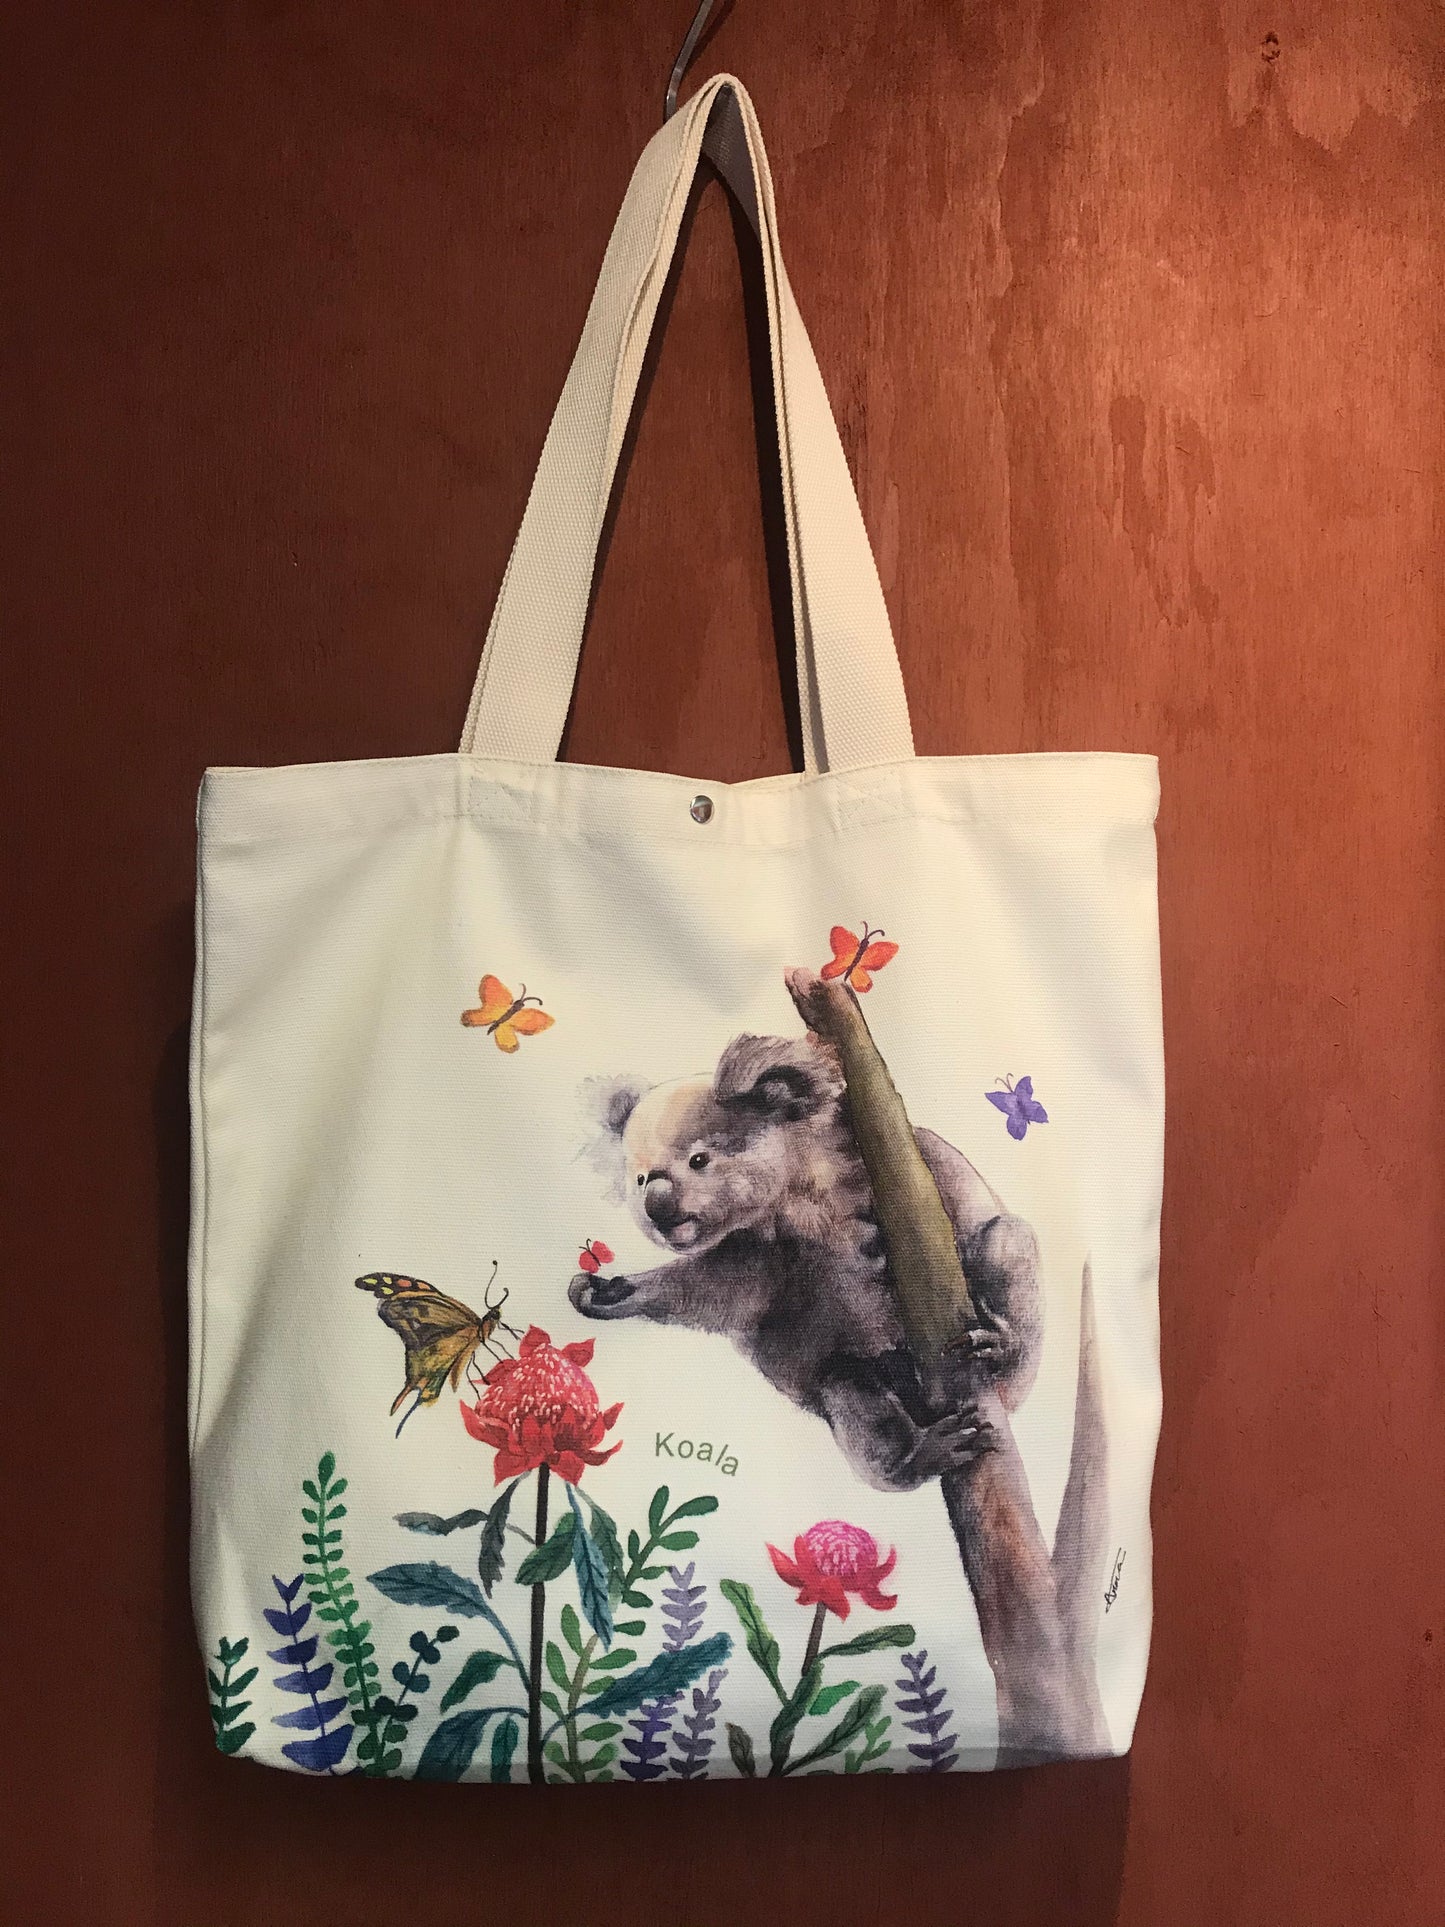 Koala Tote Bag,art bag,gift,Australian animal